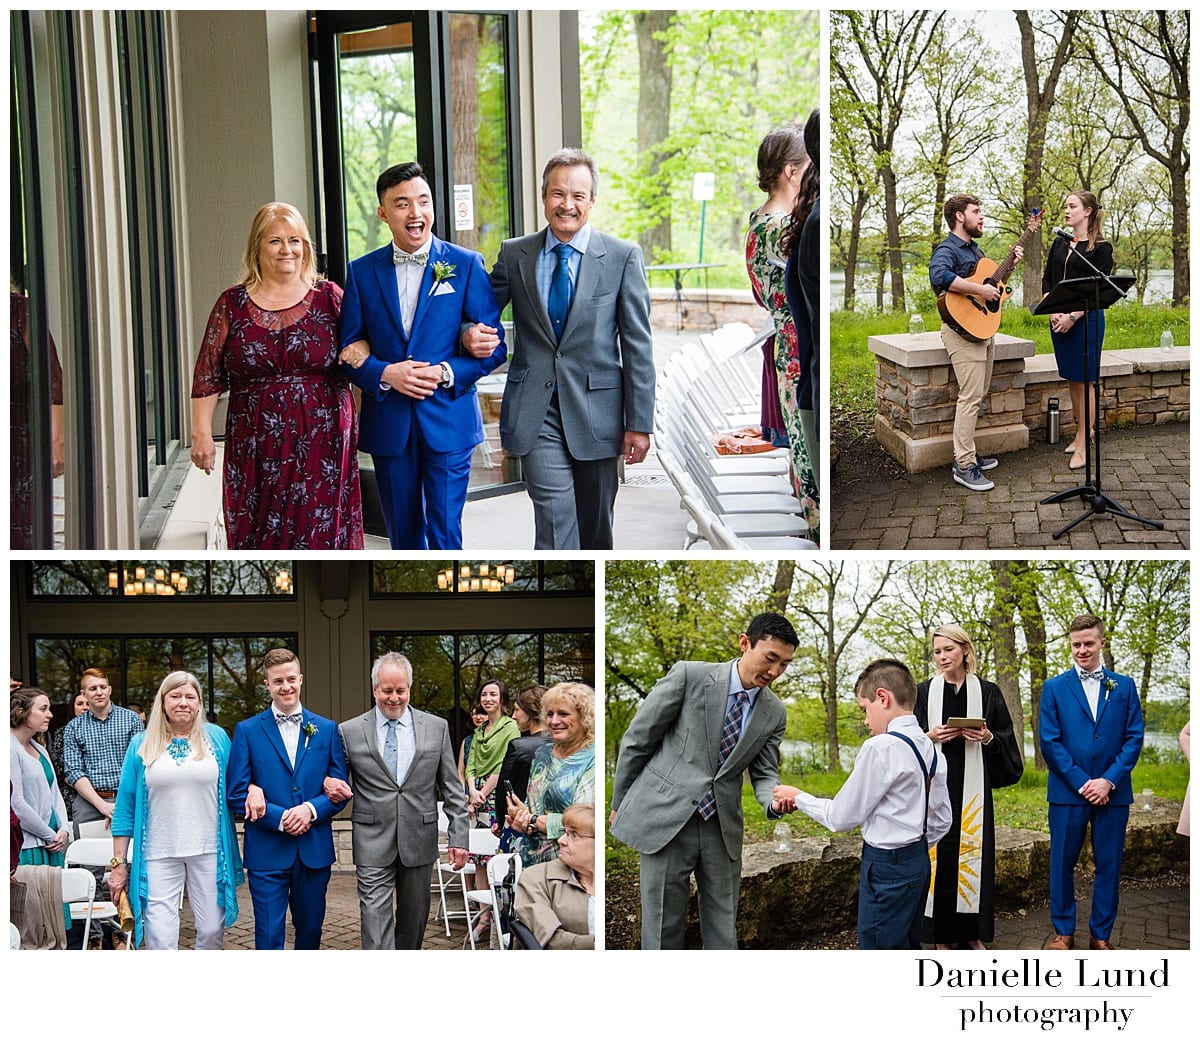 Silverwood-Park-wedding-ceremony-Danielle-Lund-Photography-Minneapolis-wedding-photographer1